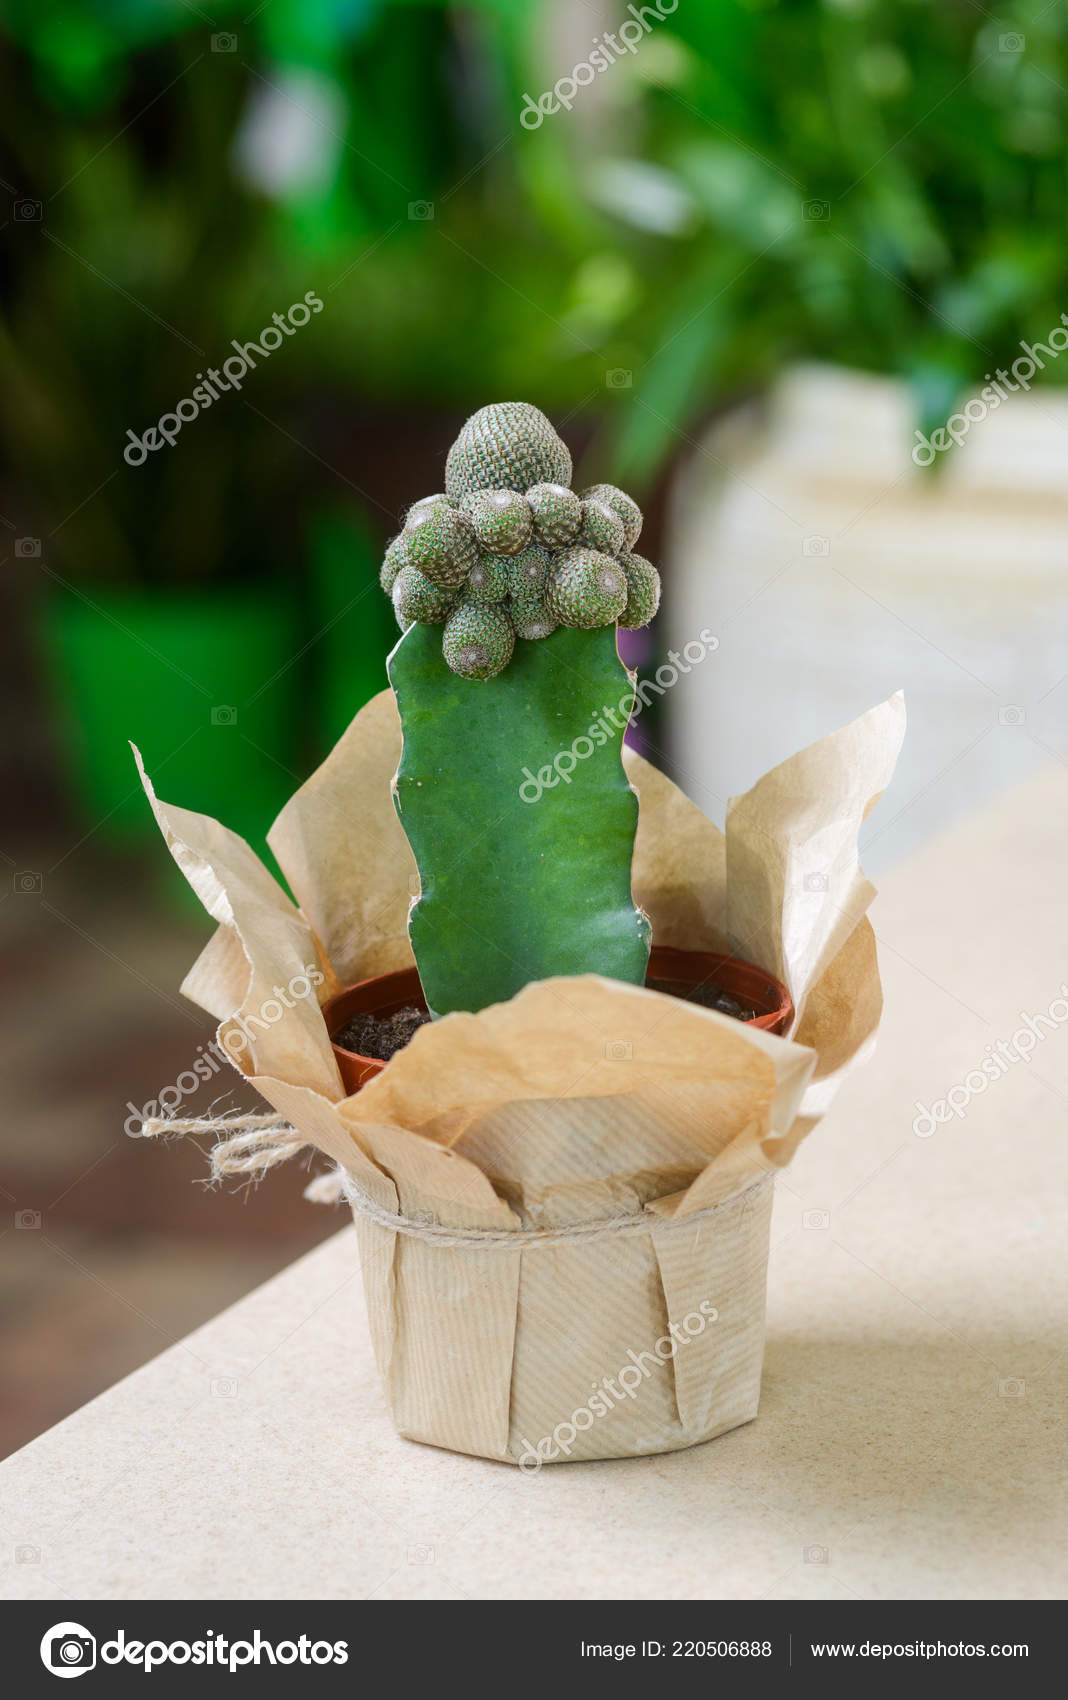 Mini Cactus In Flower Shop Stock Photo C Ygphoto 220506888